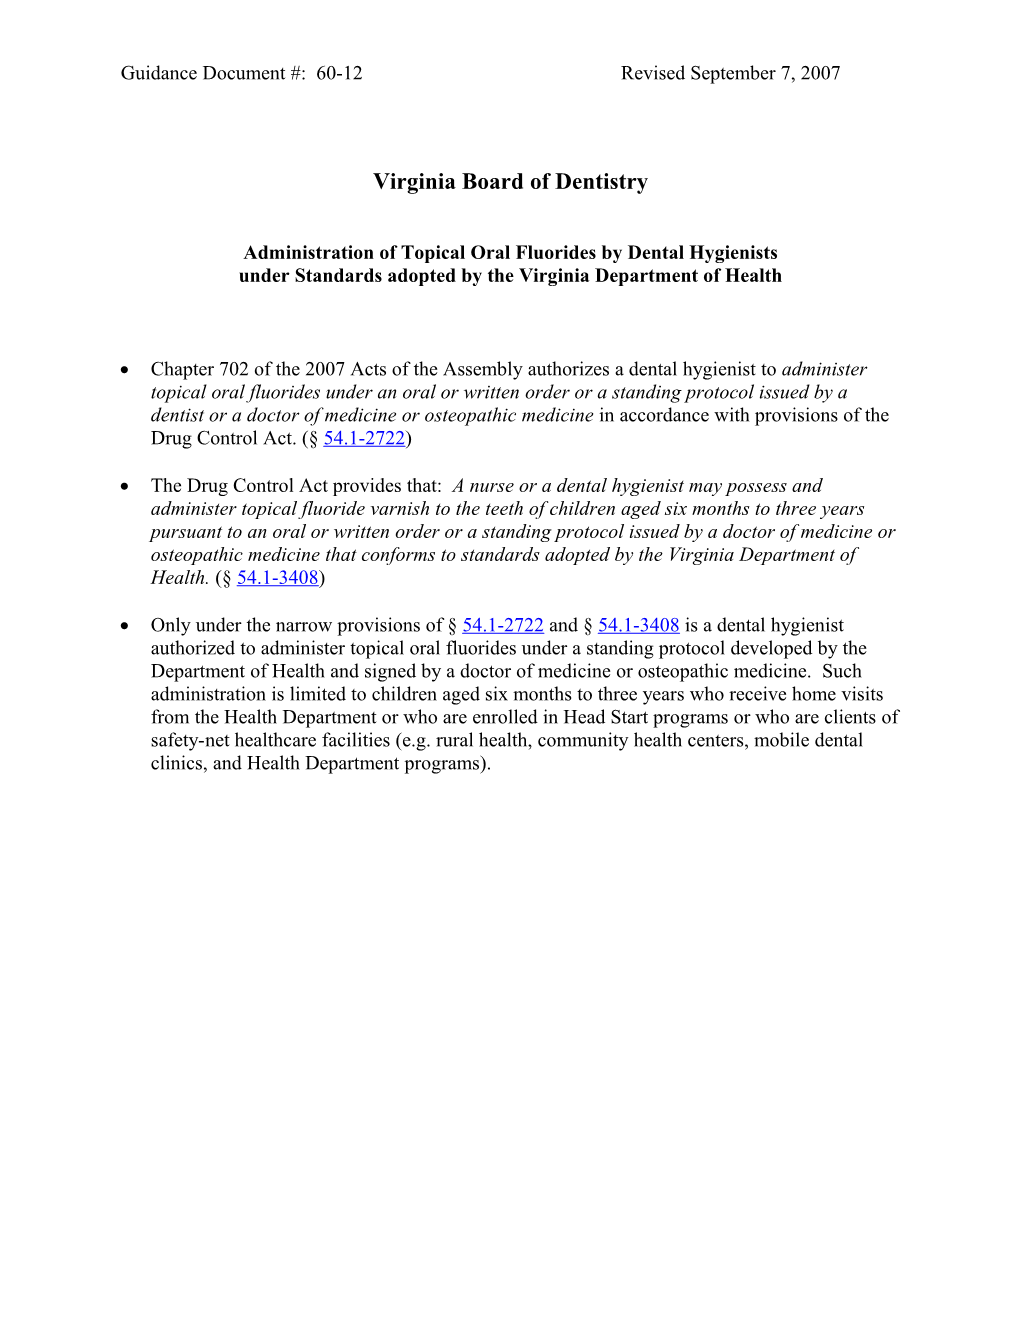 Virginia Board of Dentistry - Guidance Document 60-12